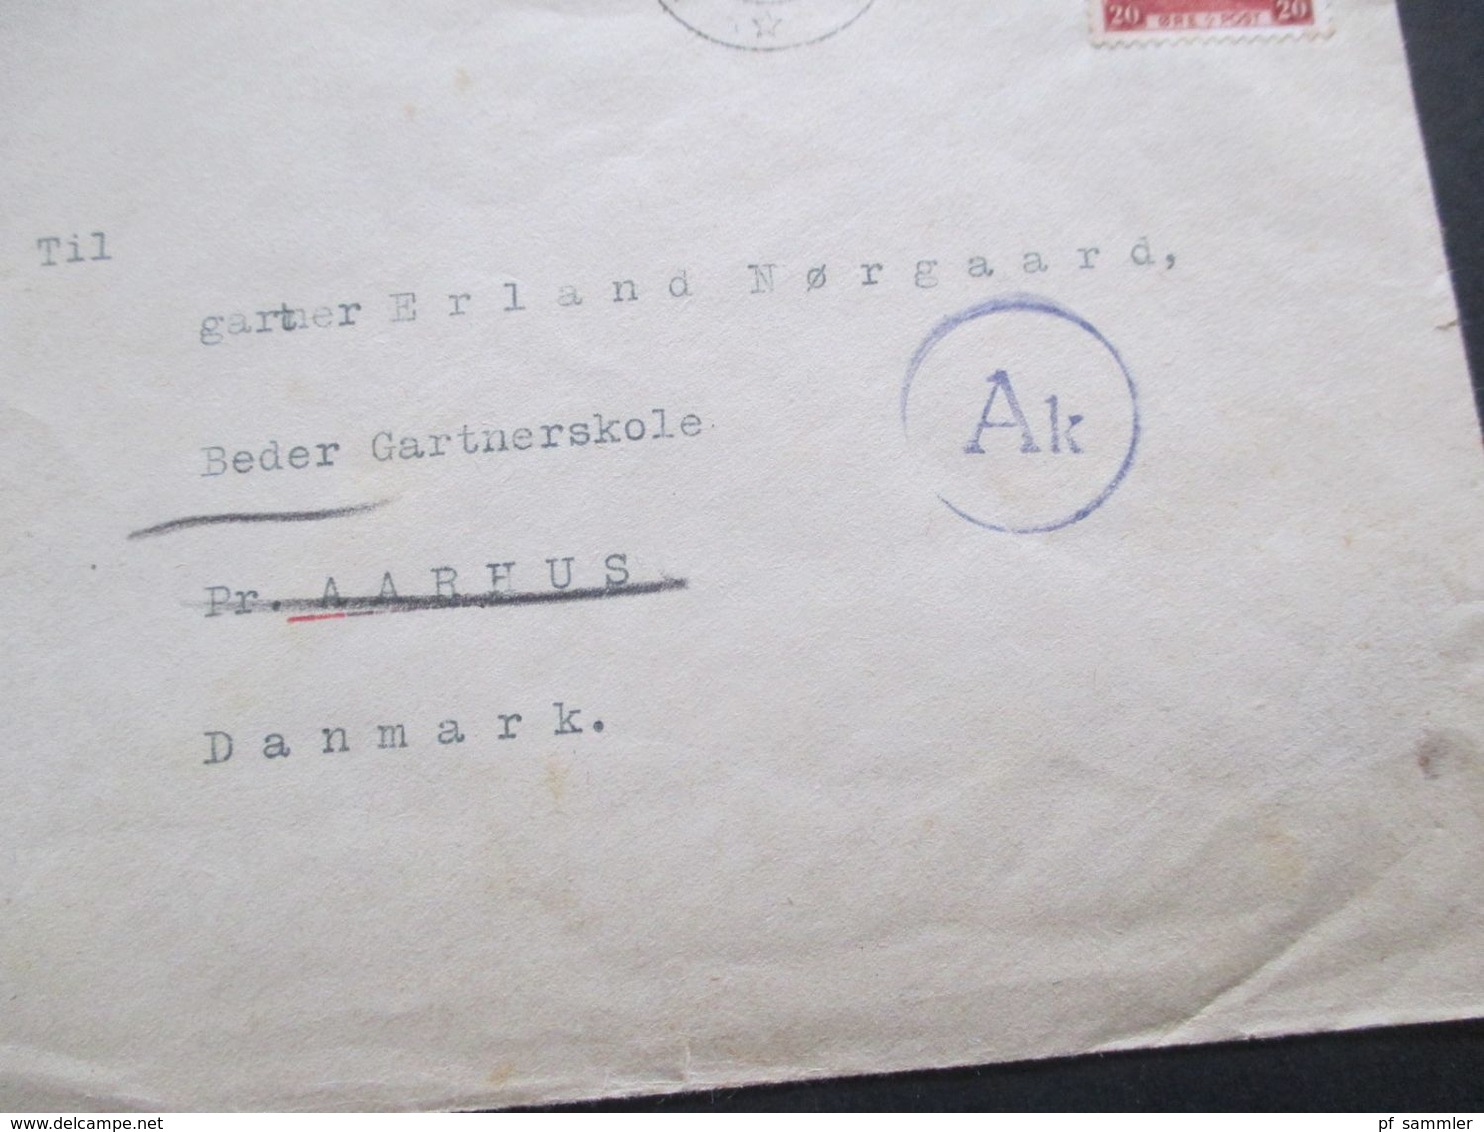 Dänemark 1941 Brief Stempel Landbrukshogskolen Ias Innerhalb Dänemarks Mit OKW Zensur / Zensurstereifen + Stempel - Covers & Documents